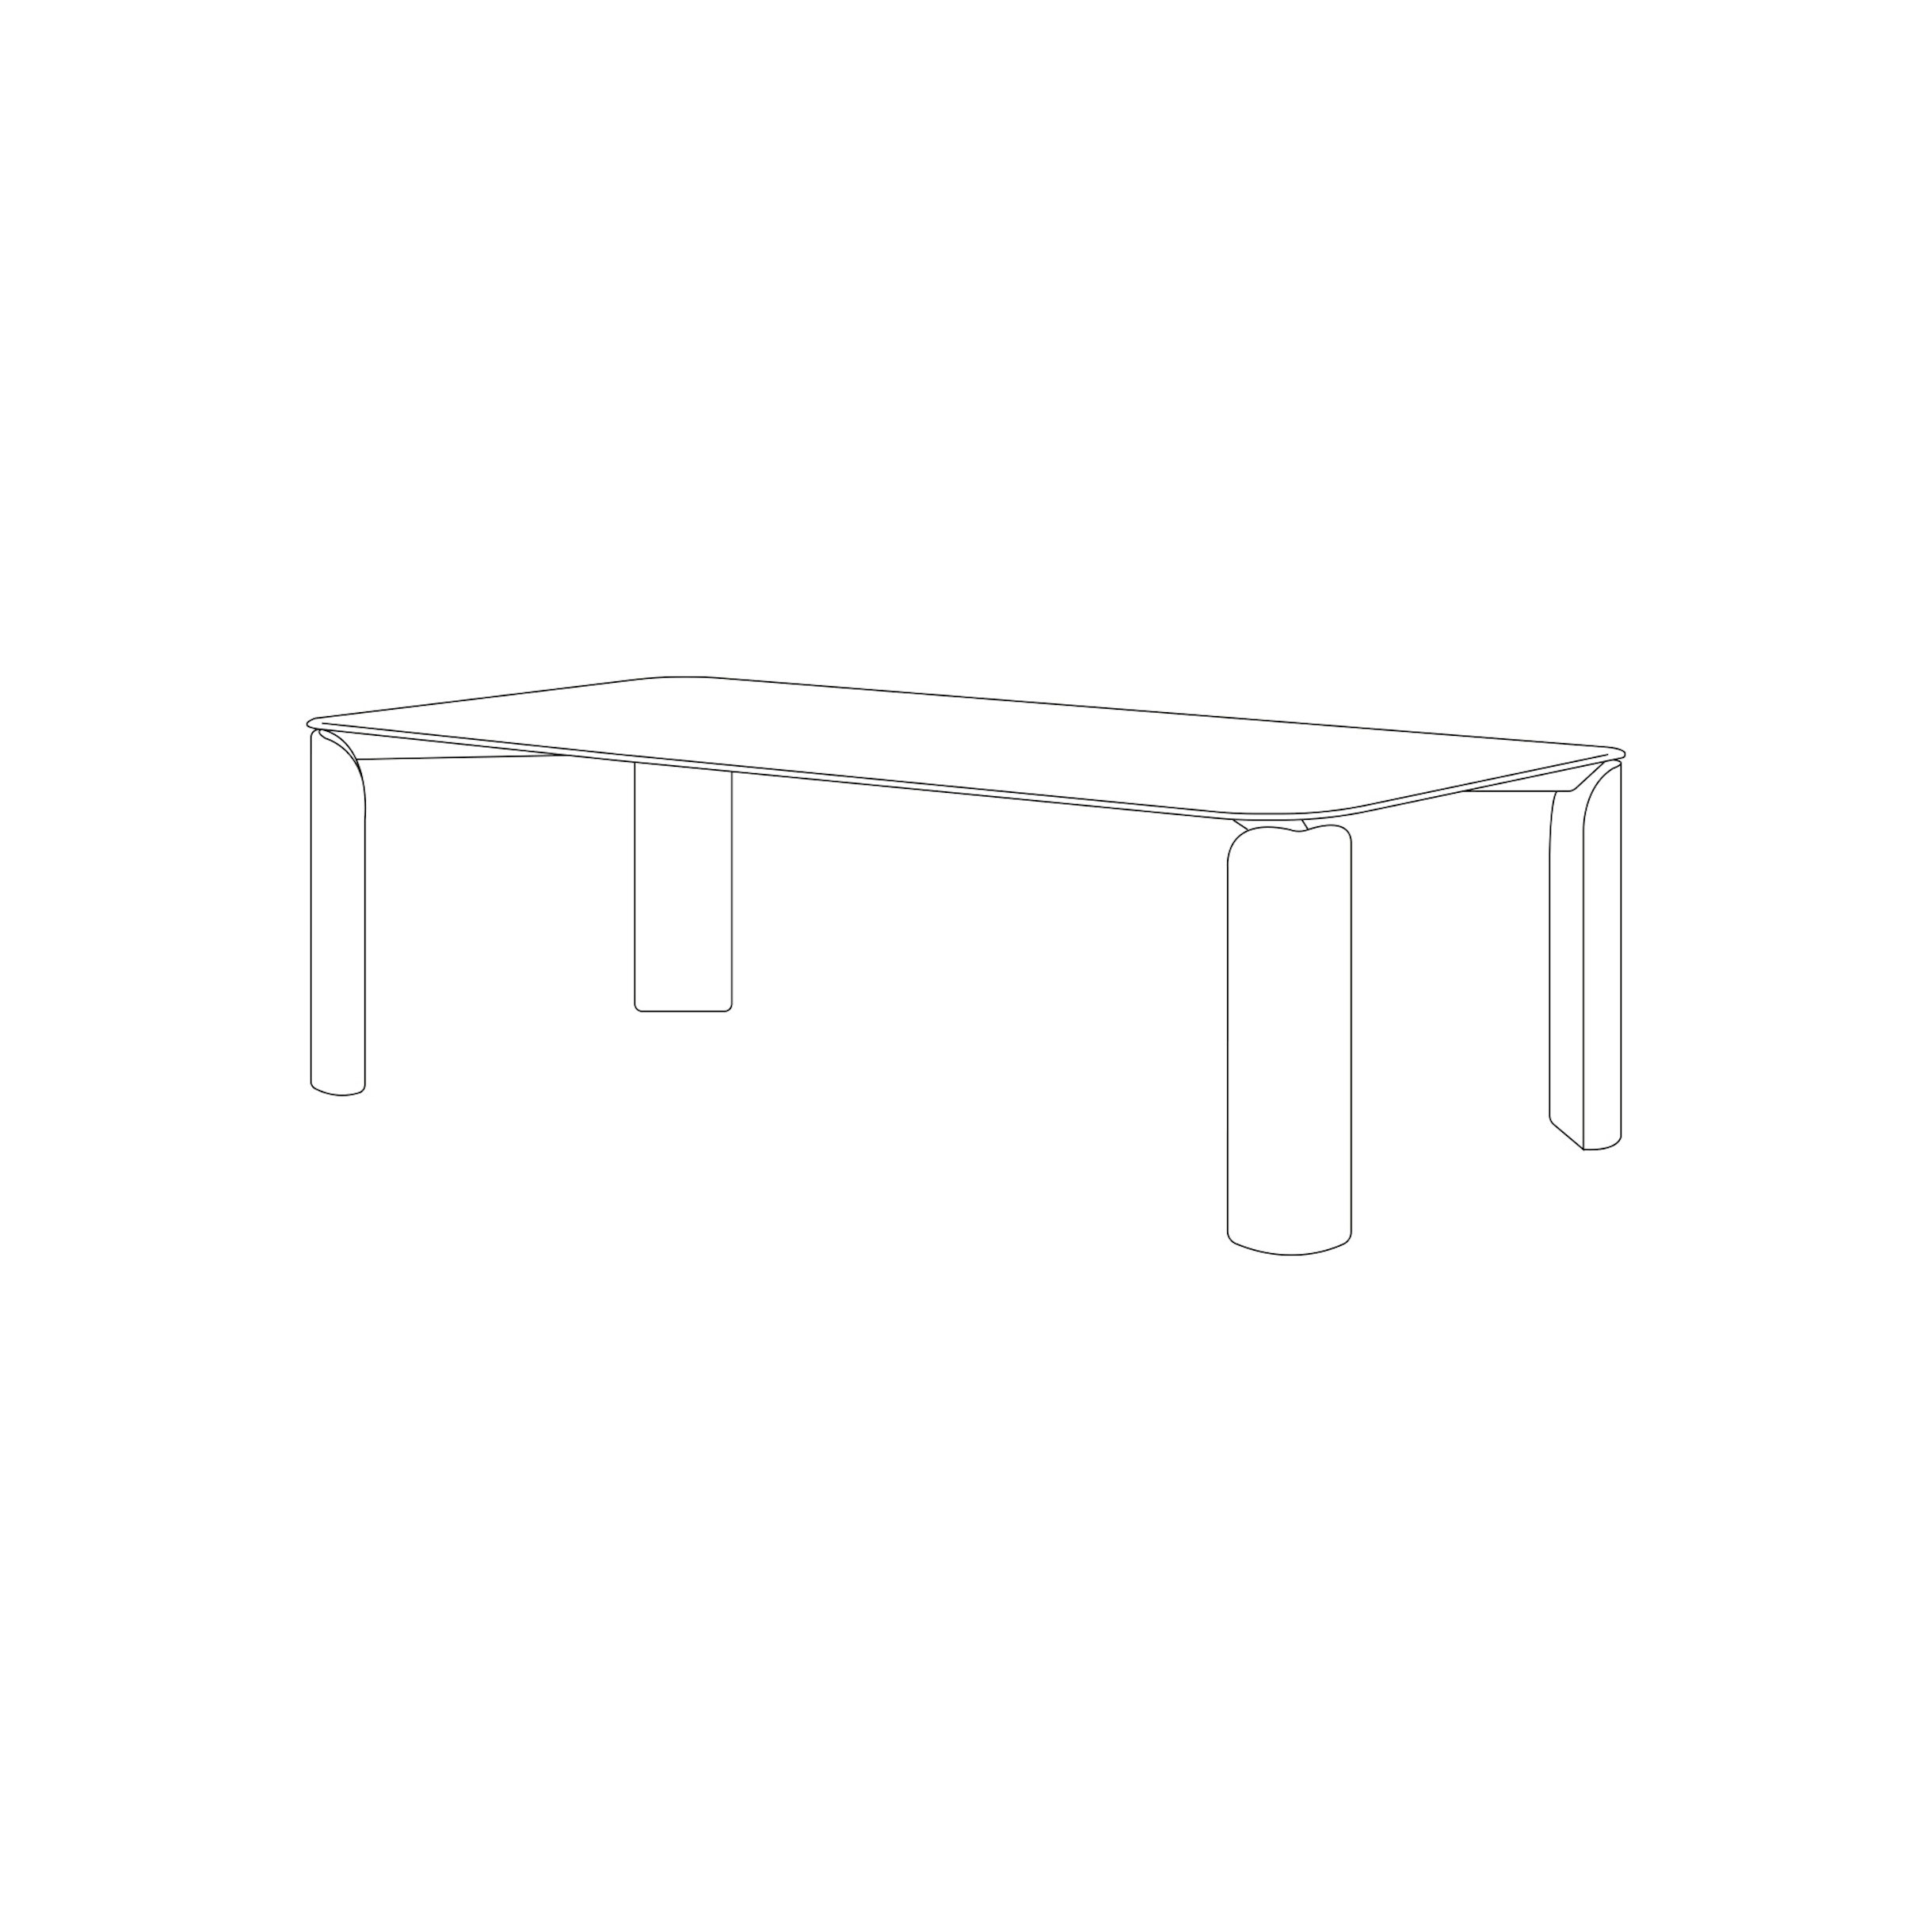 2021-07-salvatori_disegno-still-life_taula-dining-table_rectangular